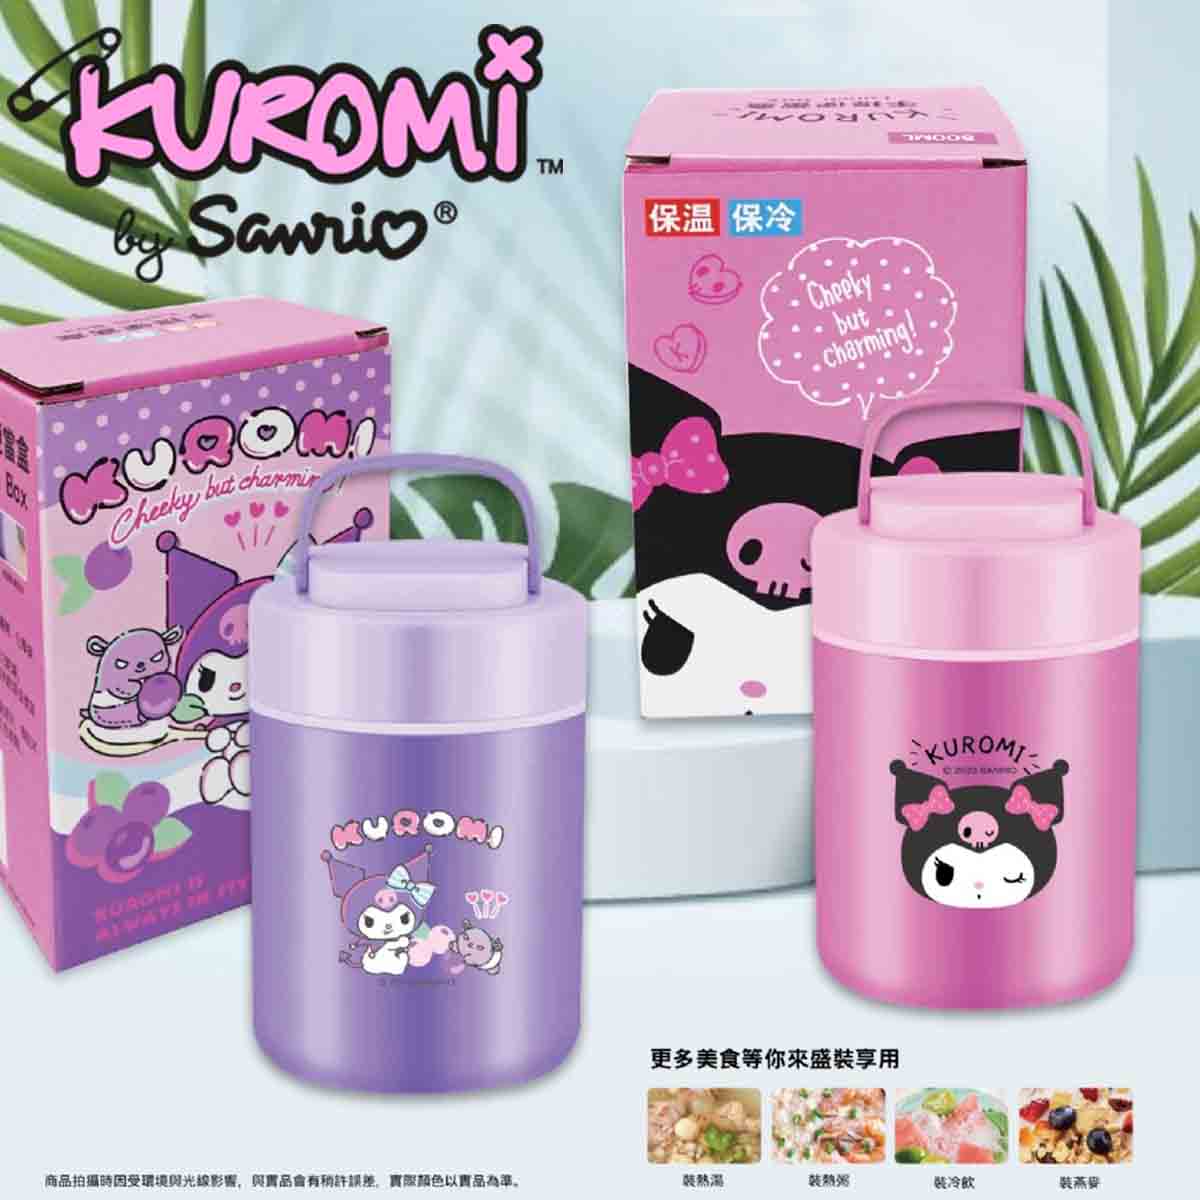 Lunch Box - Sanrio Kuromi 500ml (Taiwan Edition)